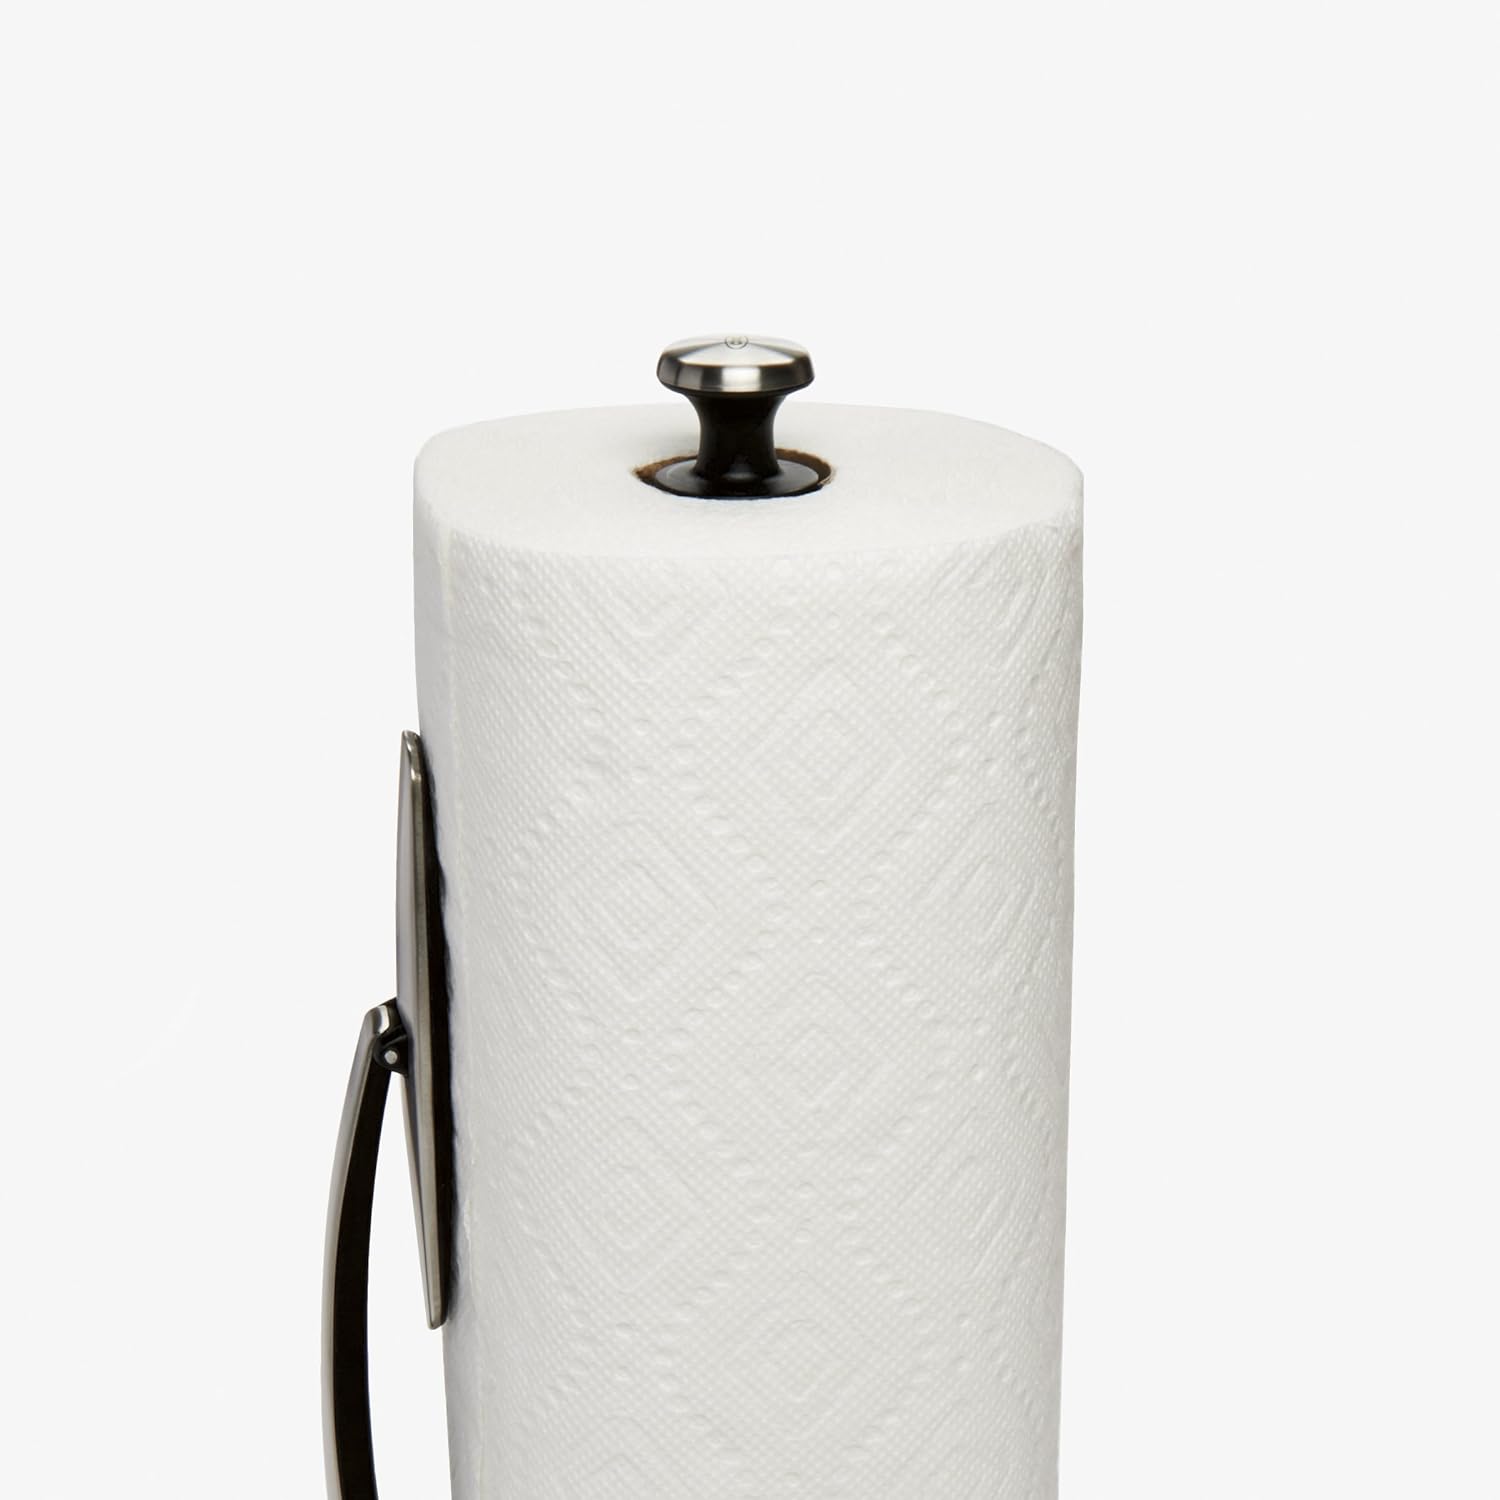 Upright Tear Paper Towel Holder Kitchen Roll Holder Vertical Tissue Dispenser QK 